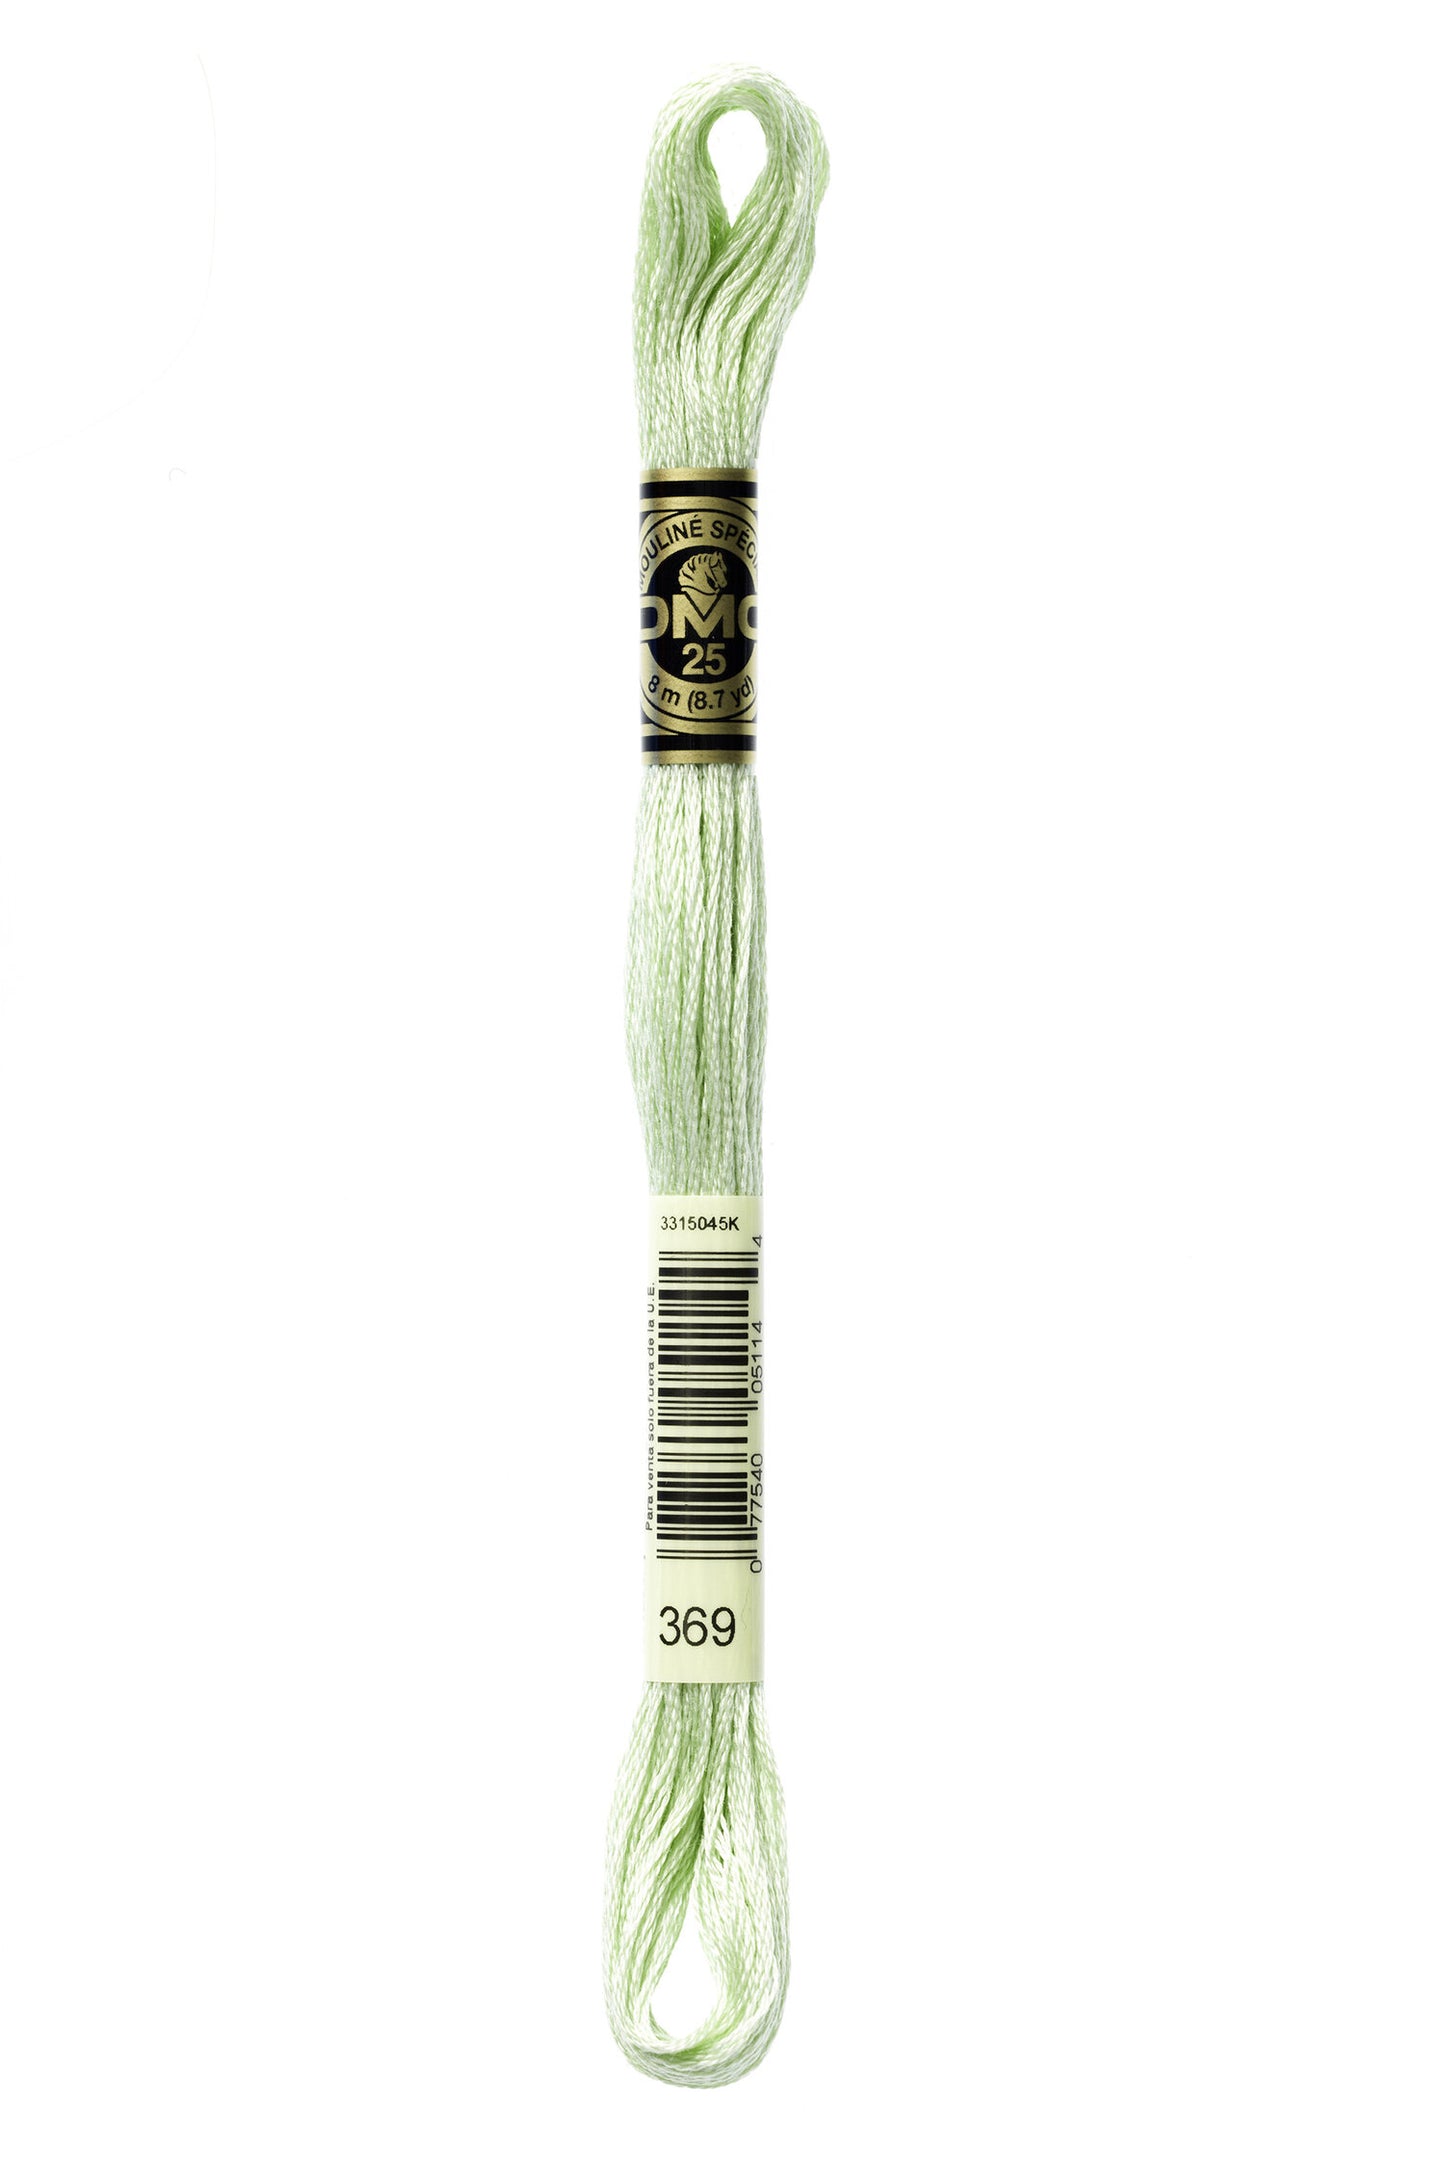 DMC 369 - Pistachio Green - Very Light - DMC 6 Strand Embroidery Thread, Thread & Floss, Thread & Floss, The Crafty Grimalkin - A Cross Stitch Store